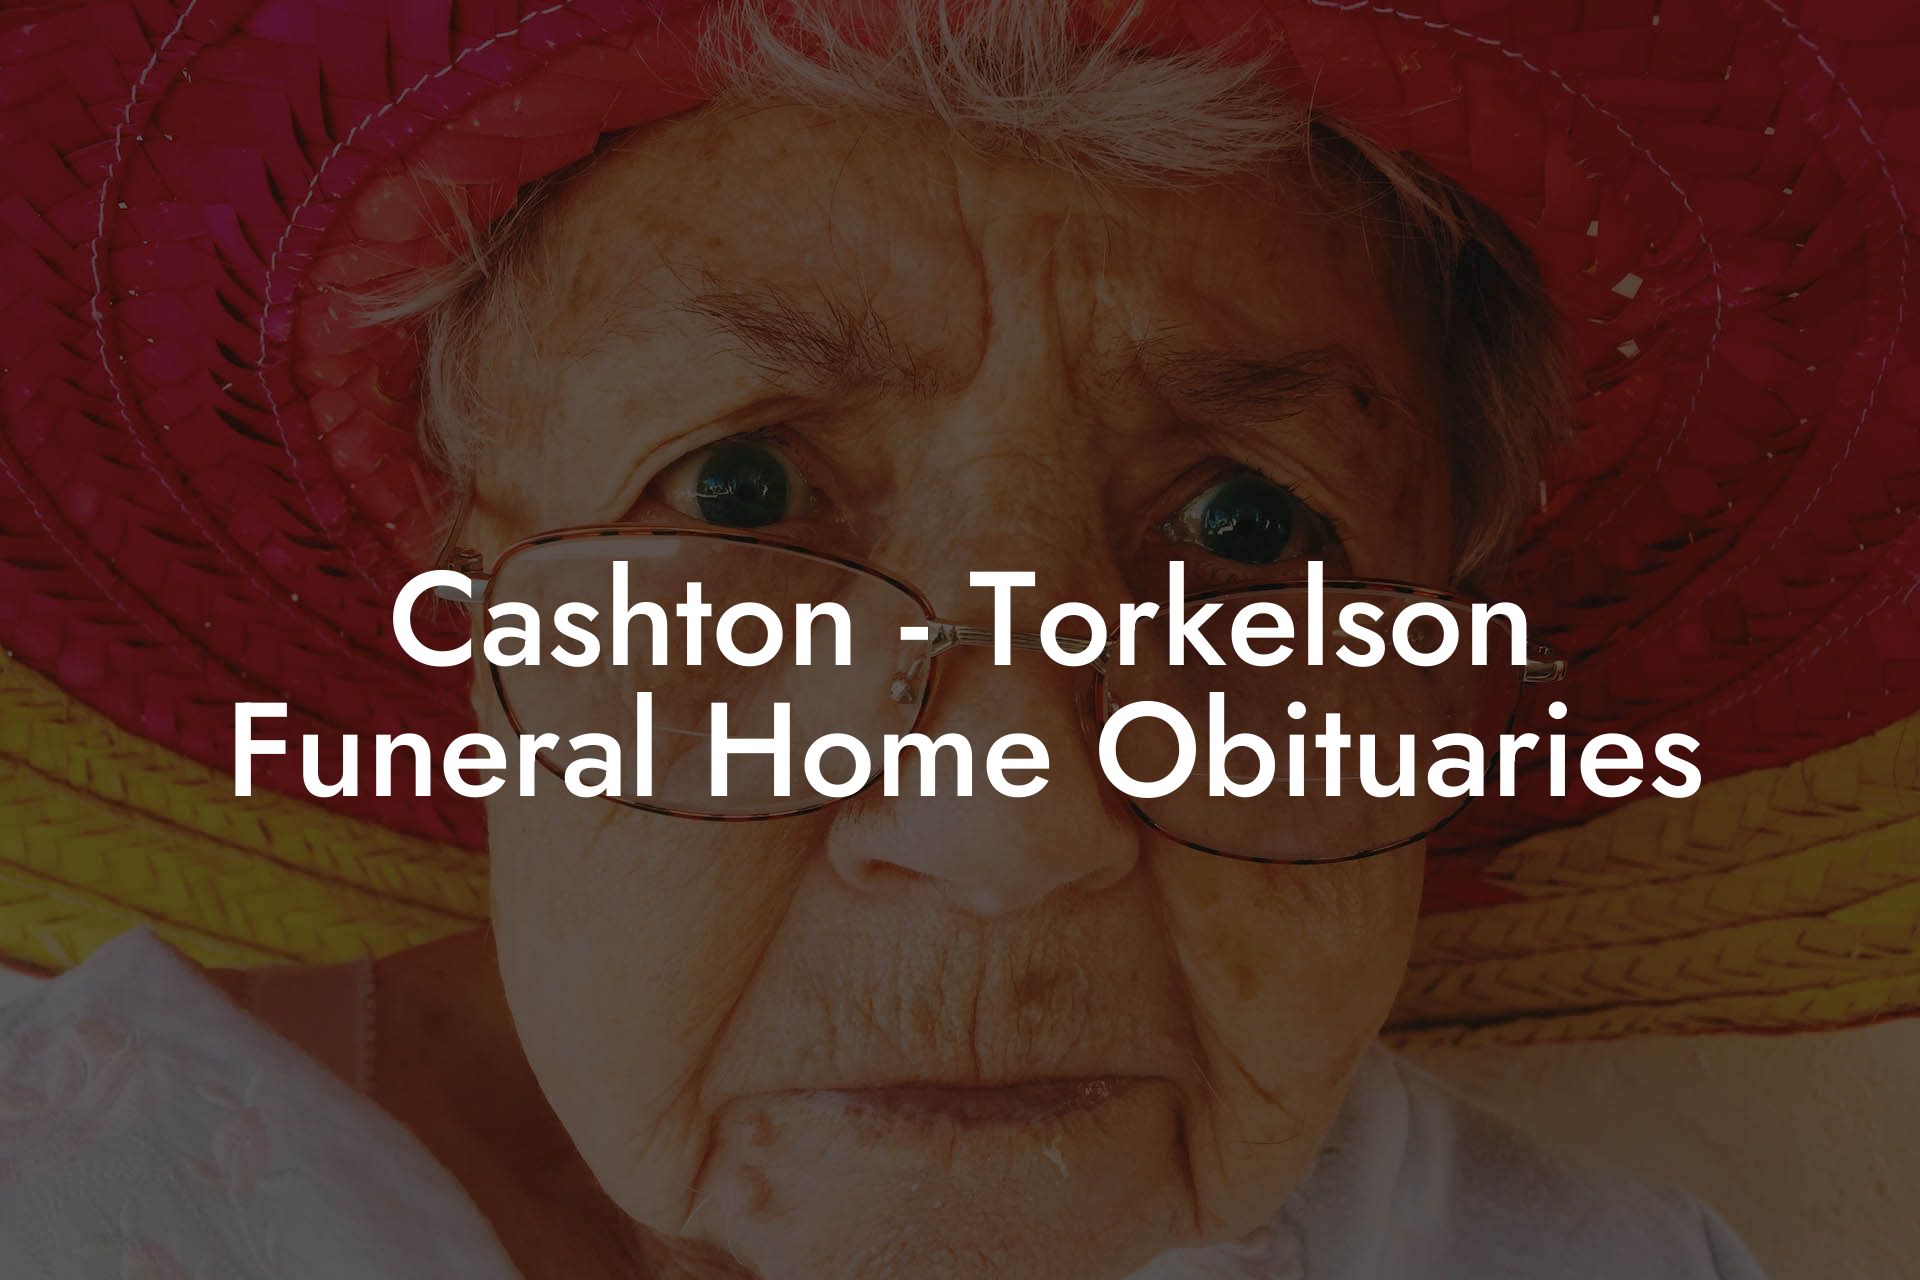 Cashton - Torkelson Funeral Home Obituaries